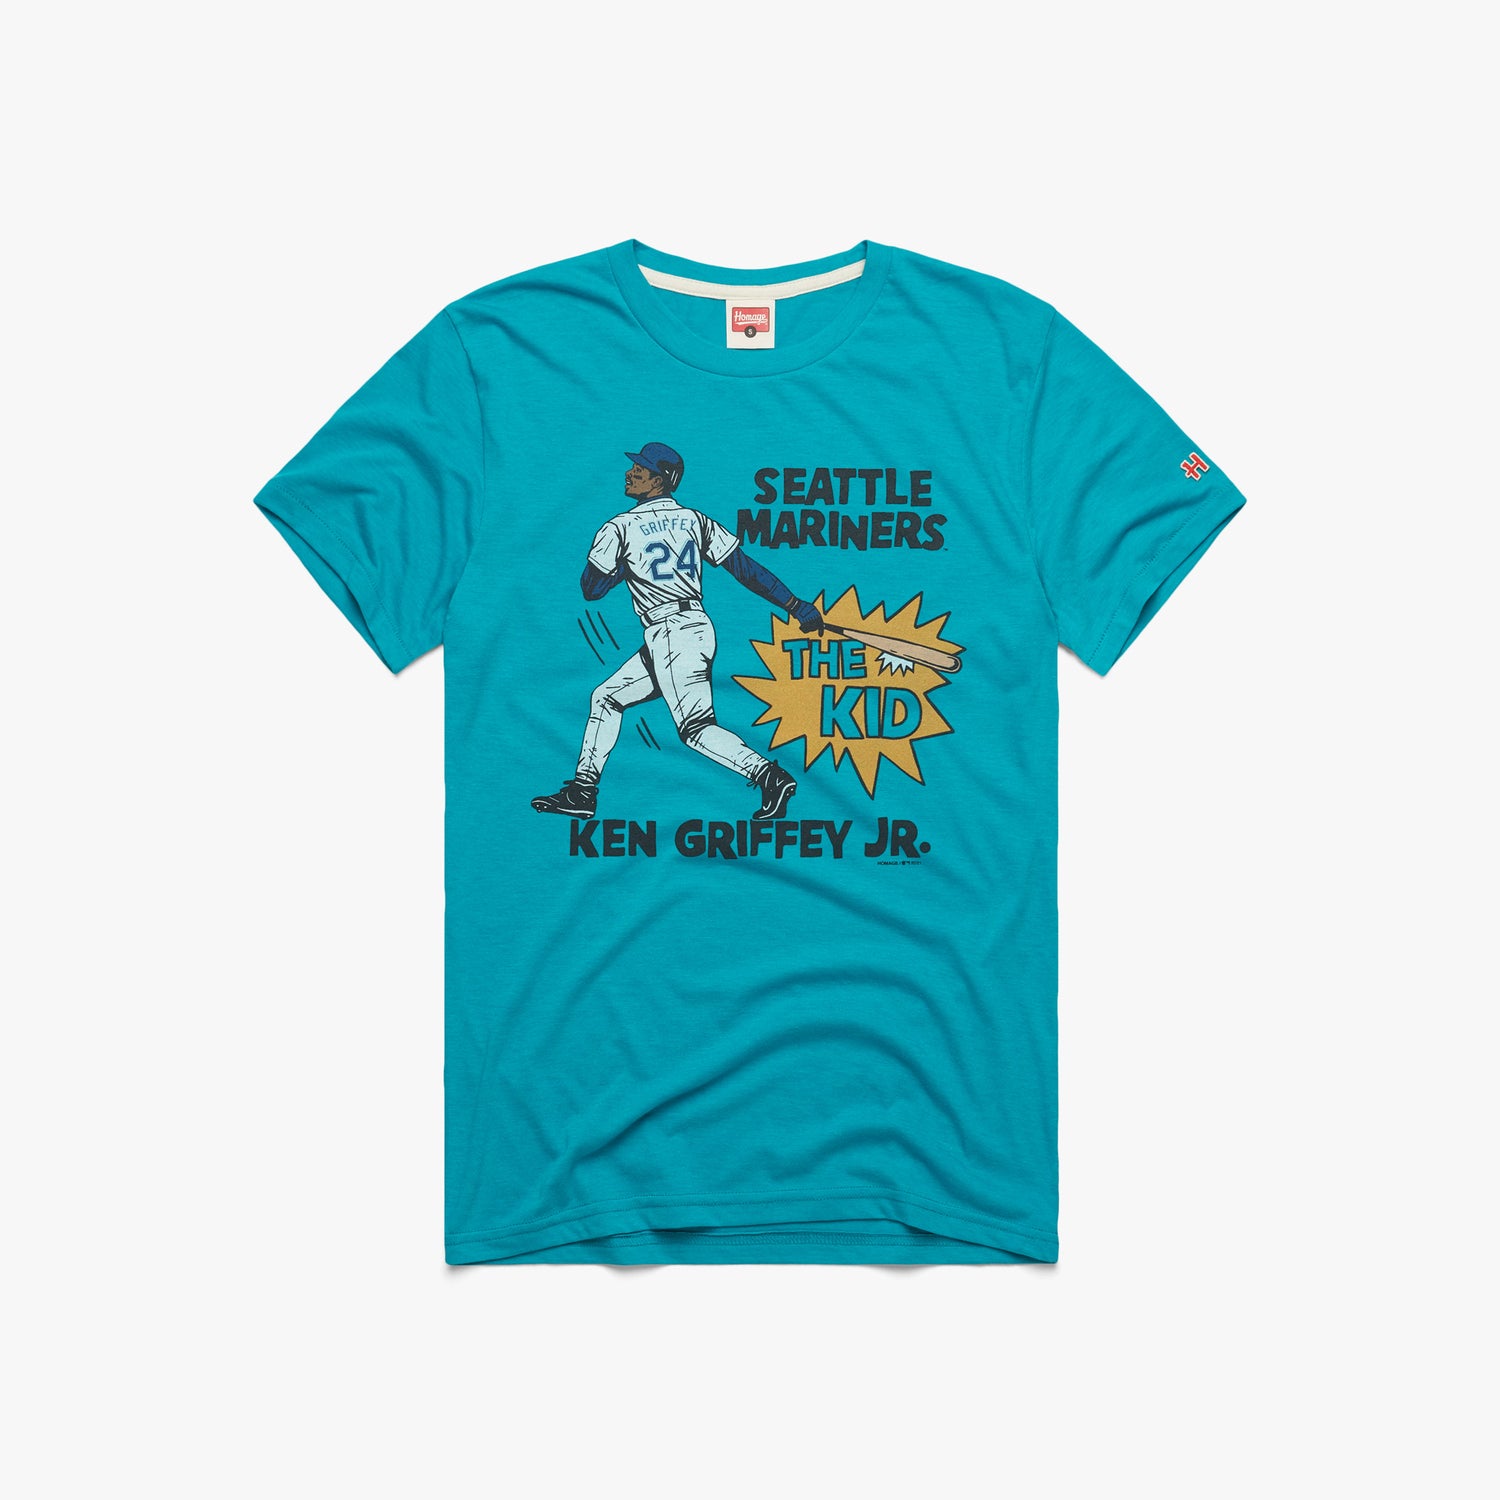 Ken Griffey Jr. Shirt Baseball shirt Classic 90s Graphic Tee Unisex Vintage  Bootleg Sweatshirt Gift Retro Homage Hoodie - AliExpress